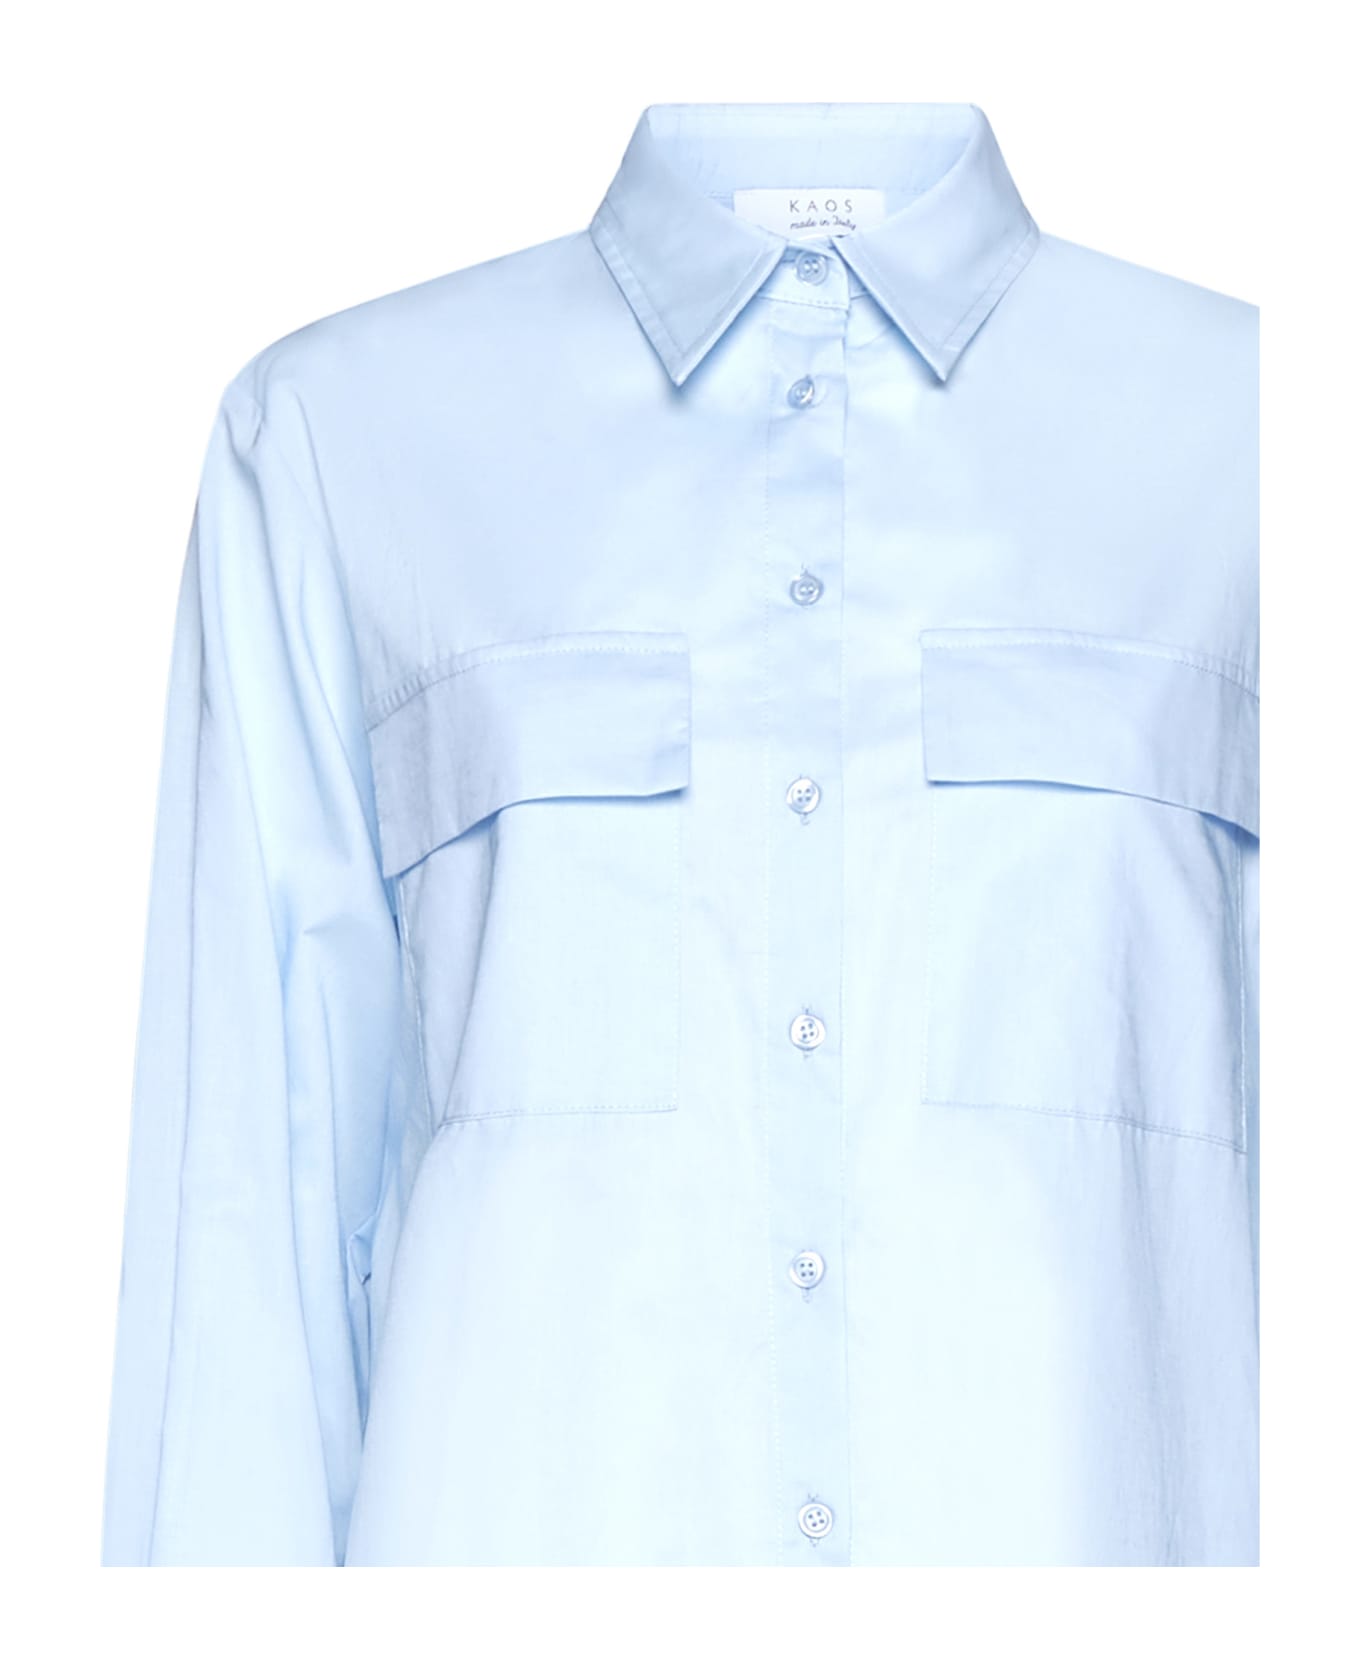 Kaos Shirt - Clear Blue